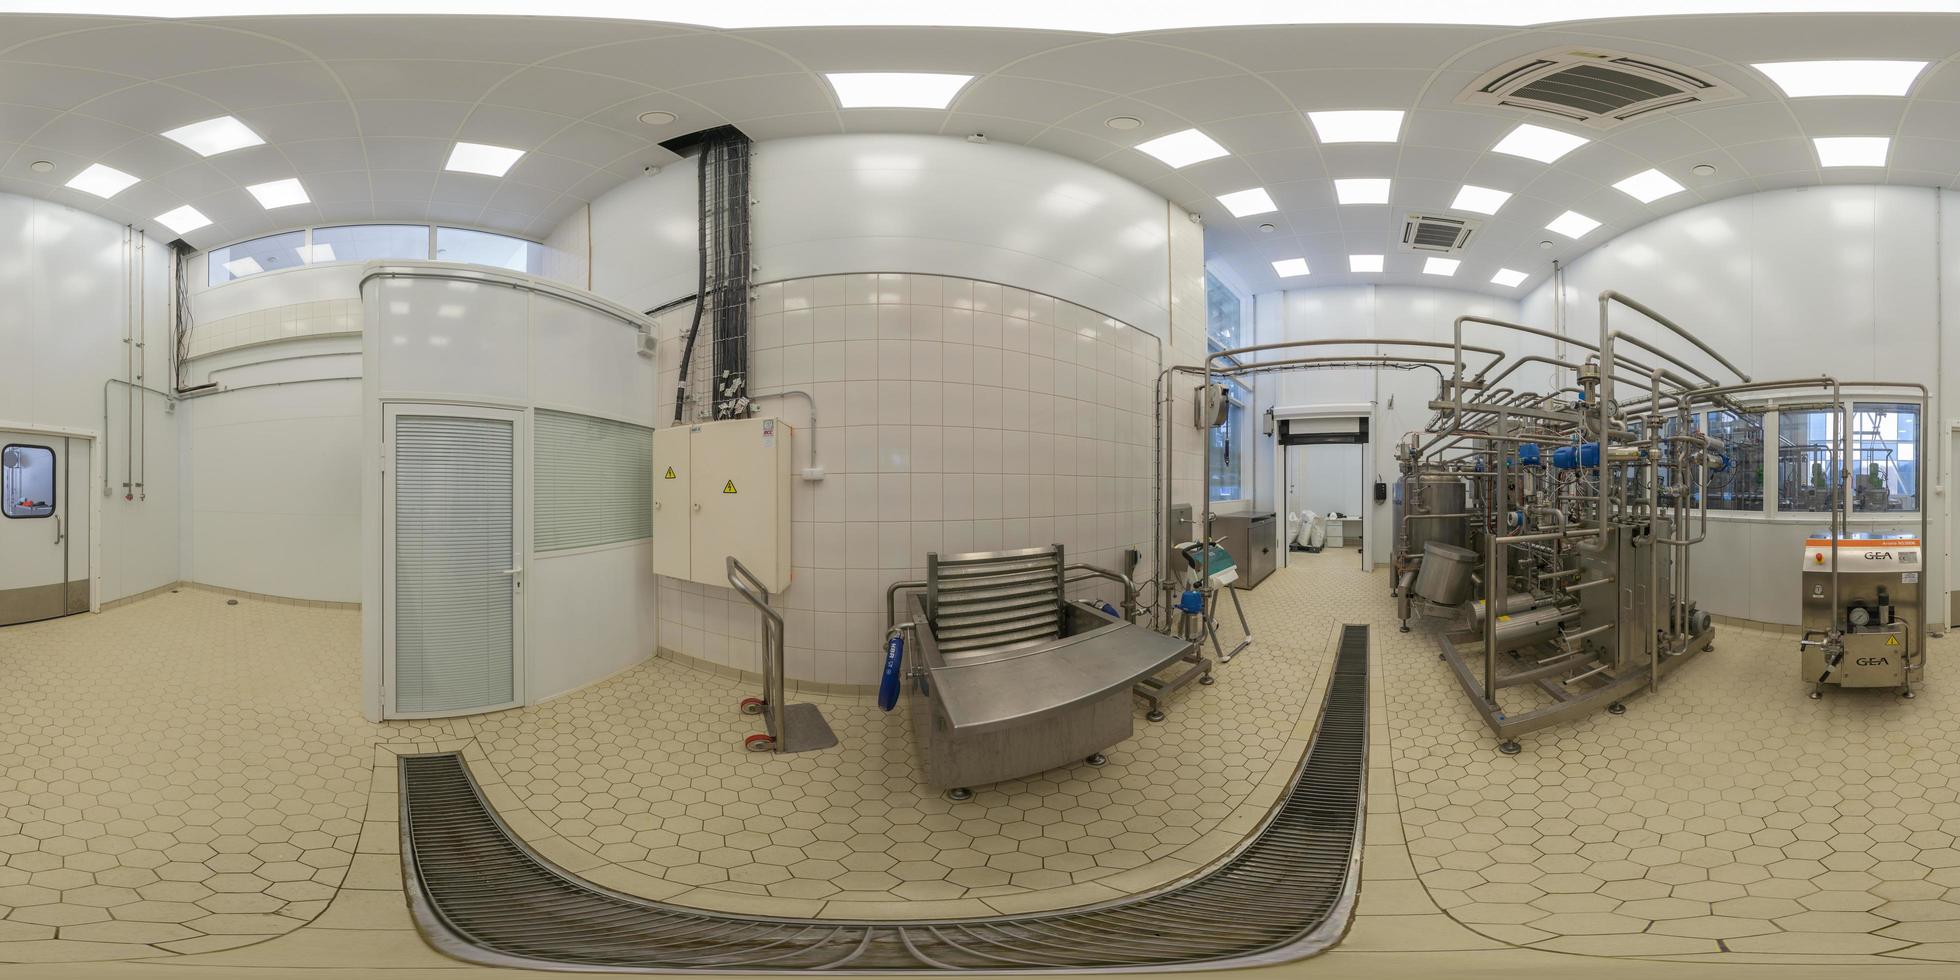 tula, Rusland februari 11, 2013 binnen van voedsel fabriek laboratorium bolvormig panorama in equirectangular projectie. foto